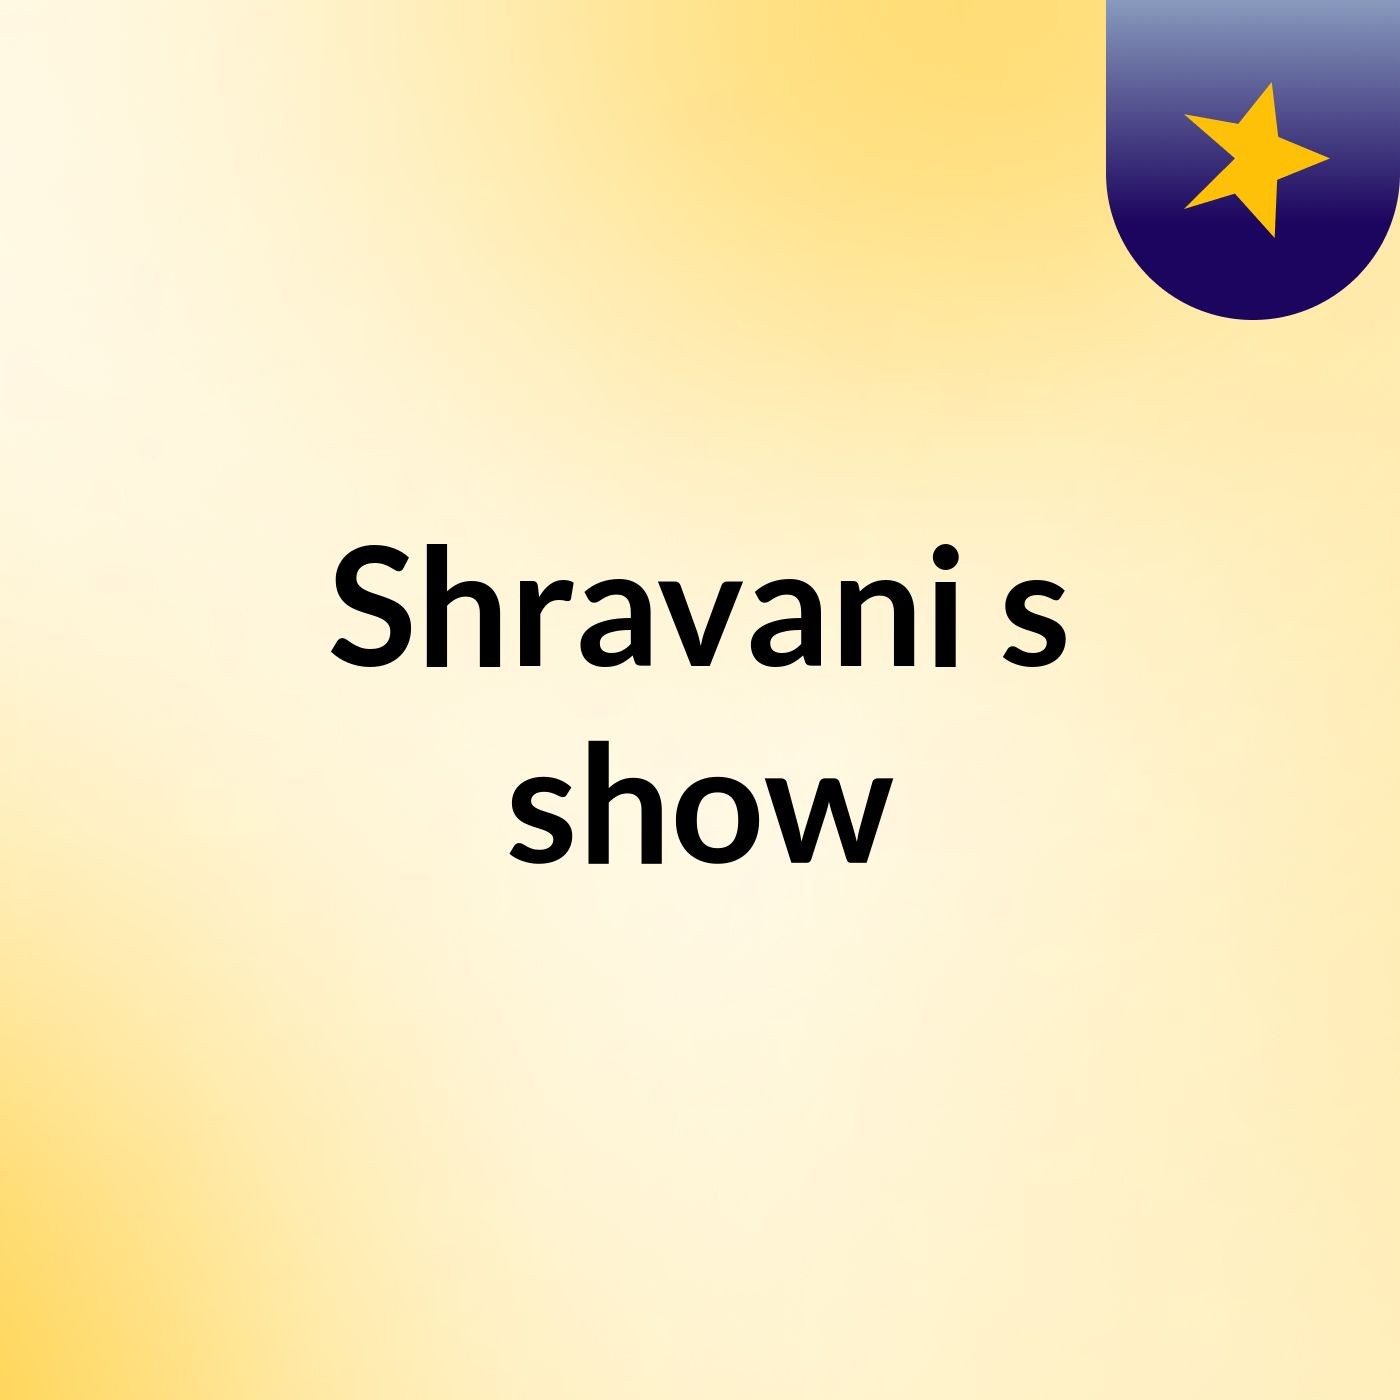 Shravani 's show